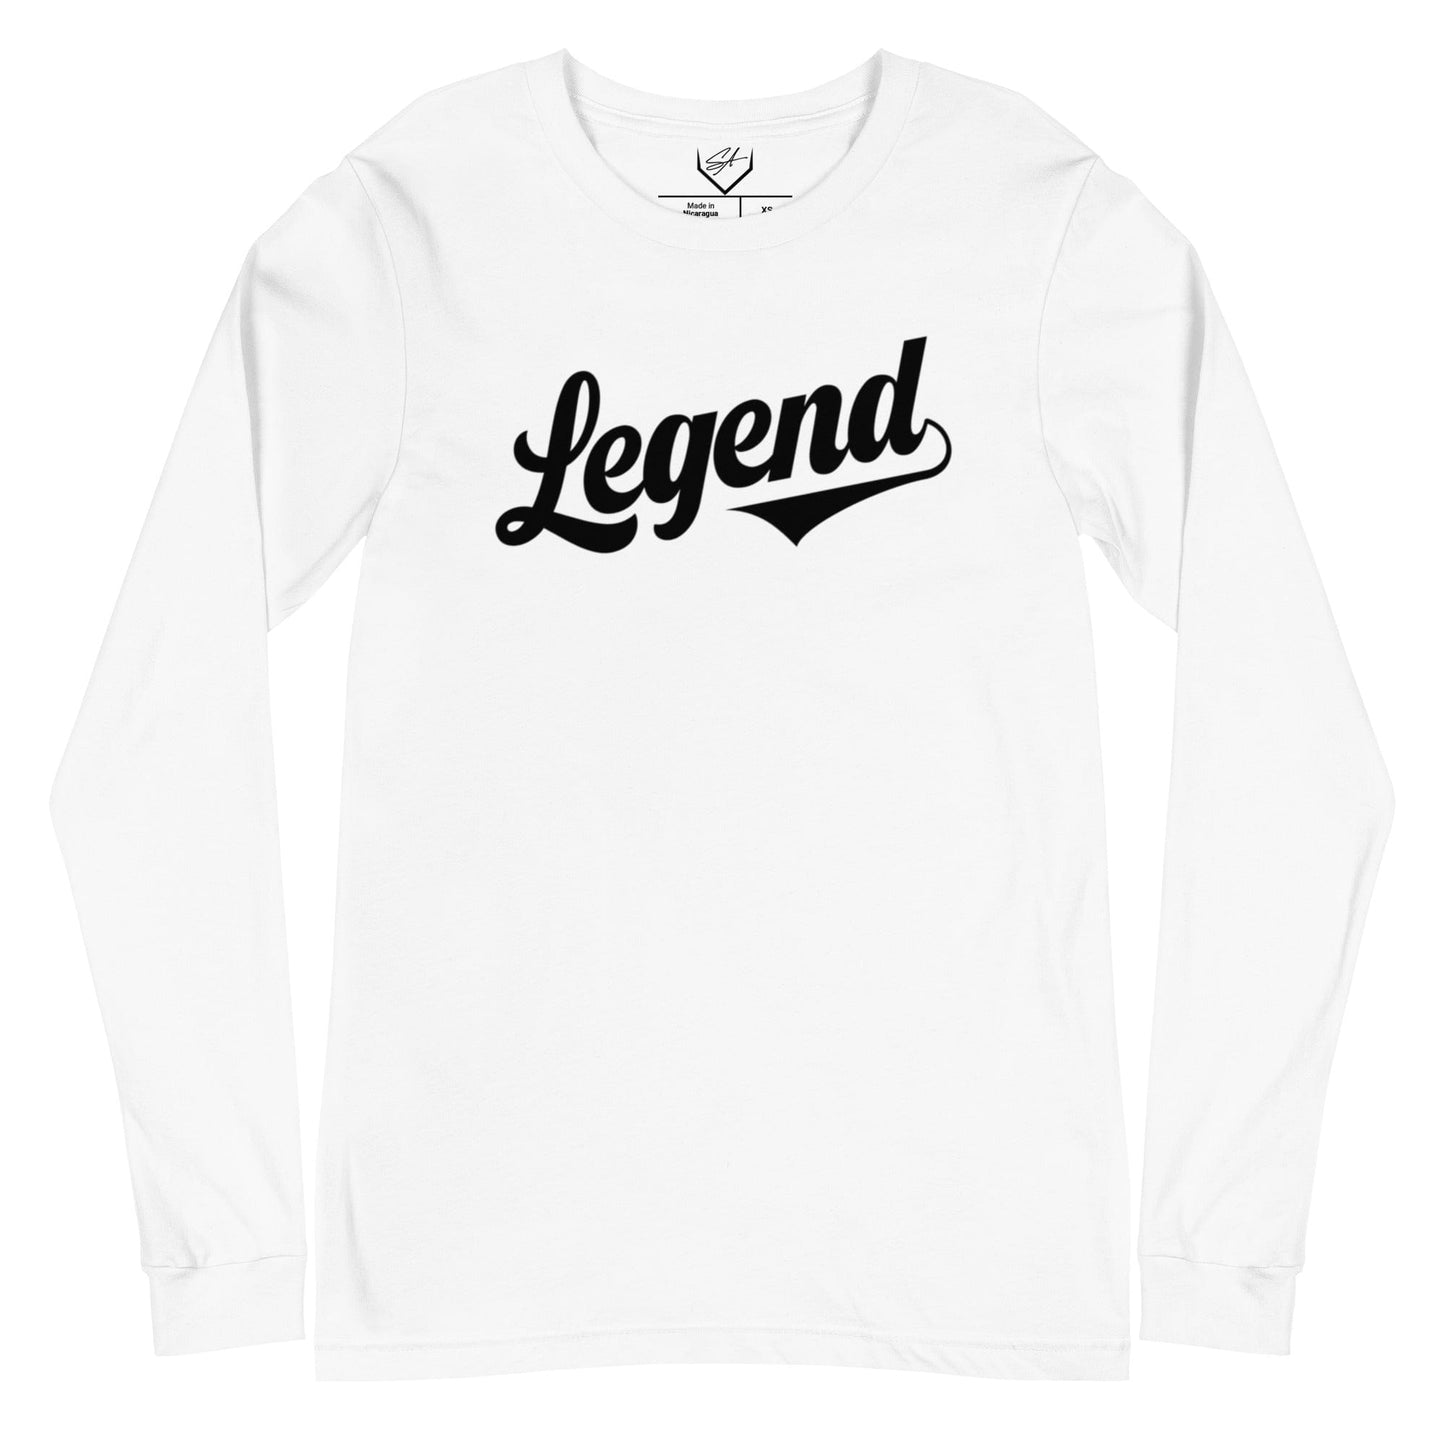 Legend - Adult Long Sleeve